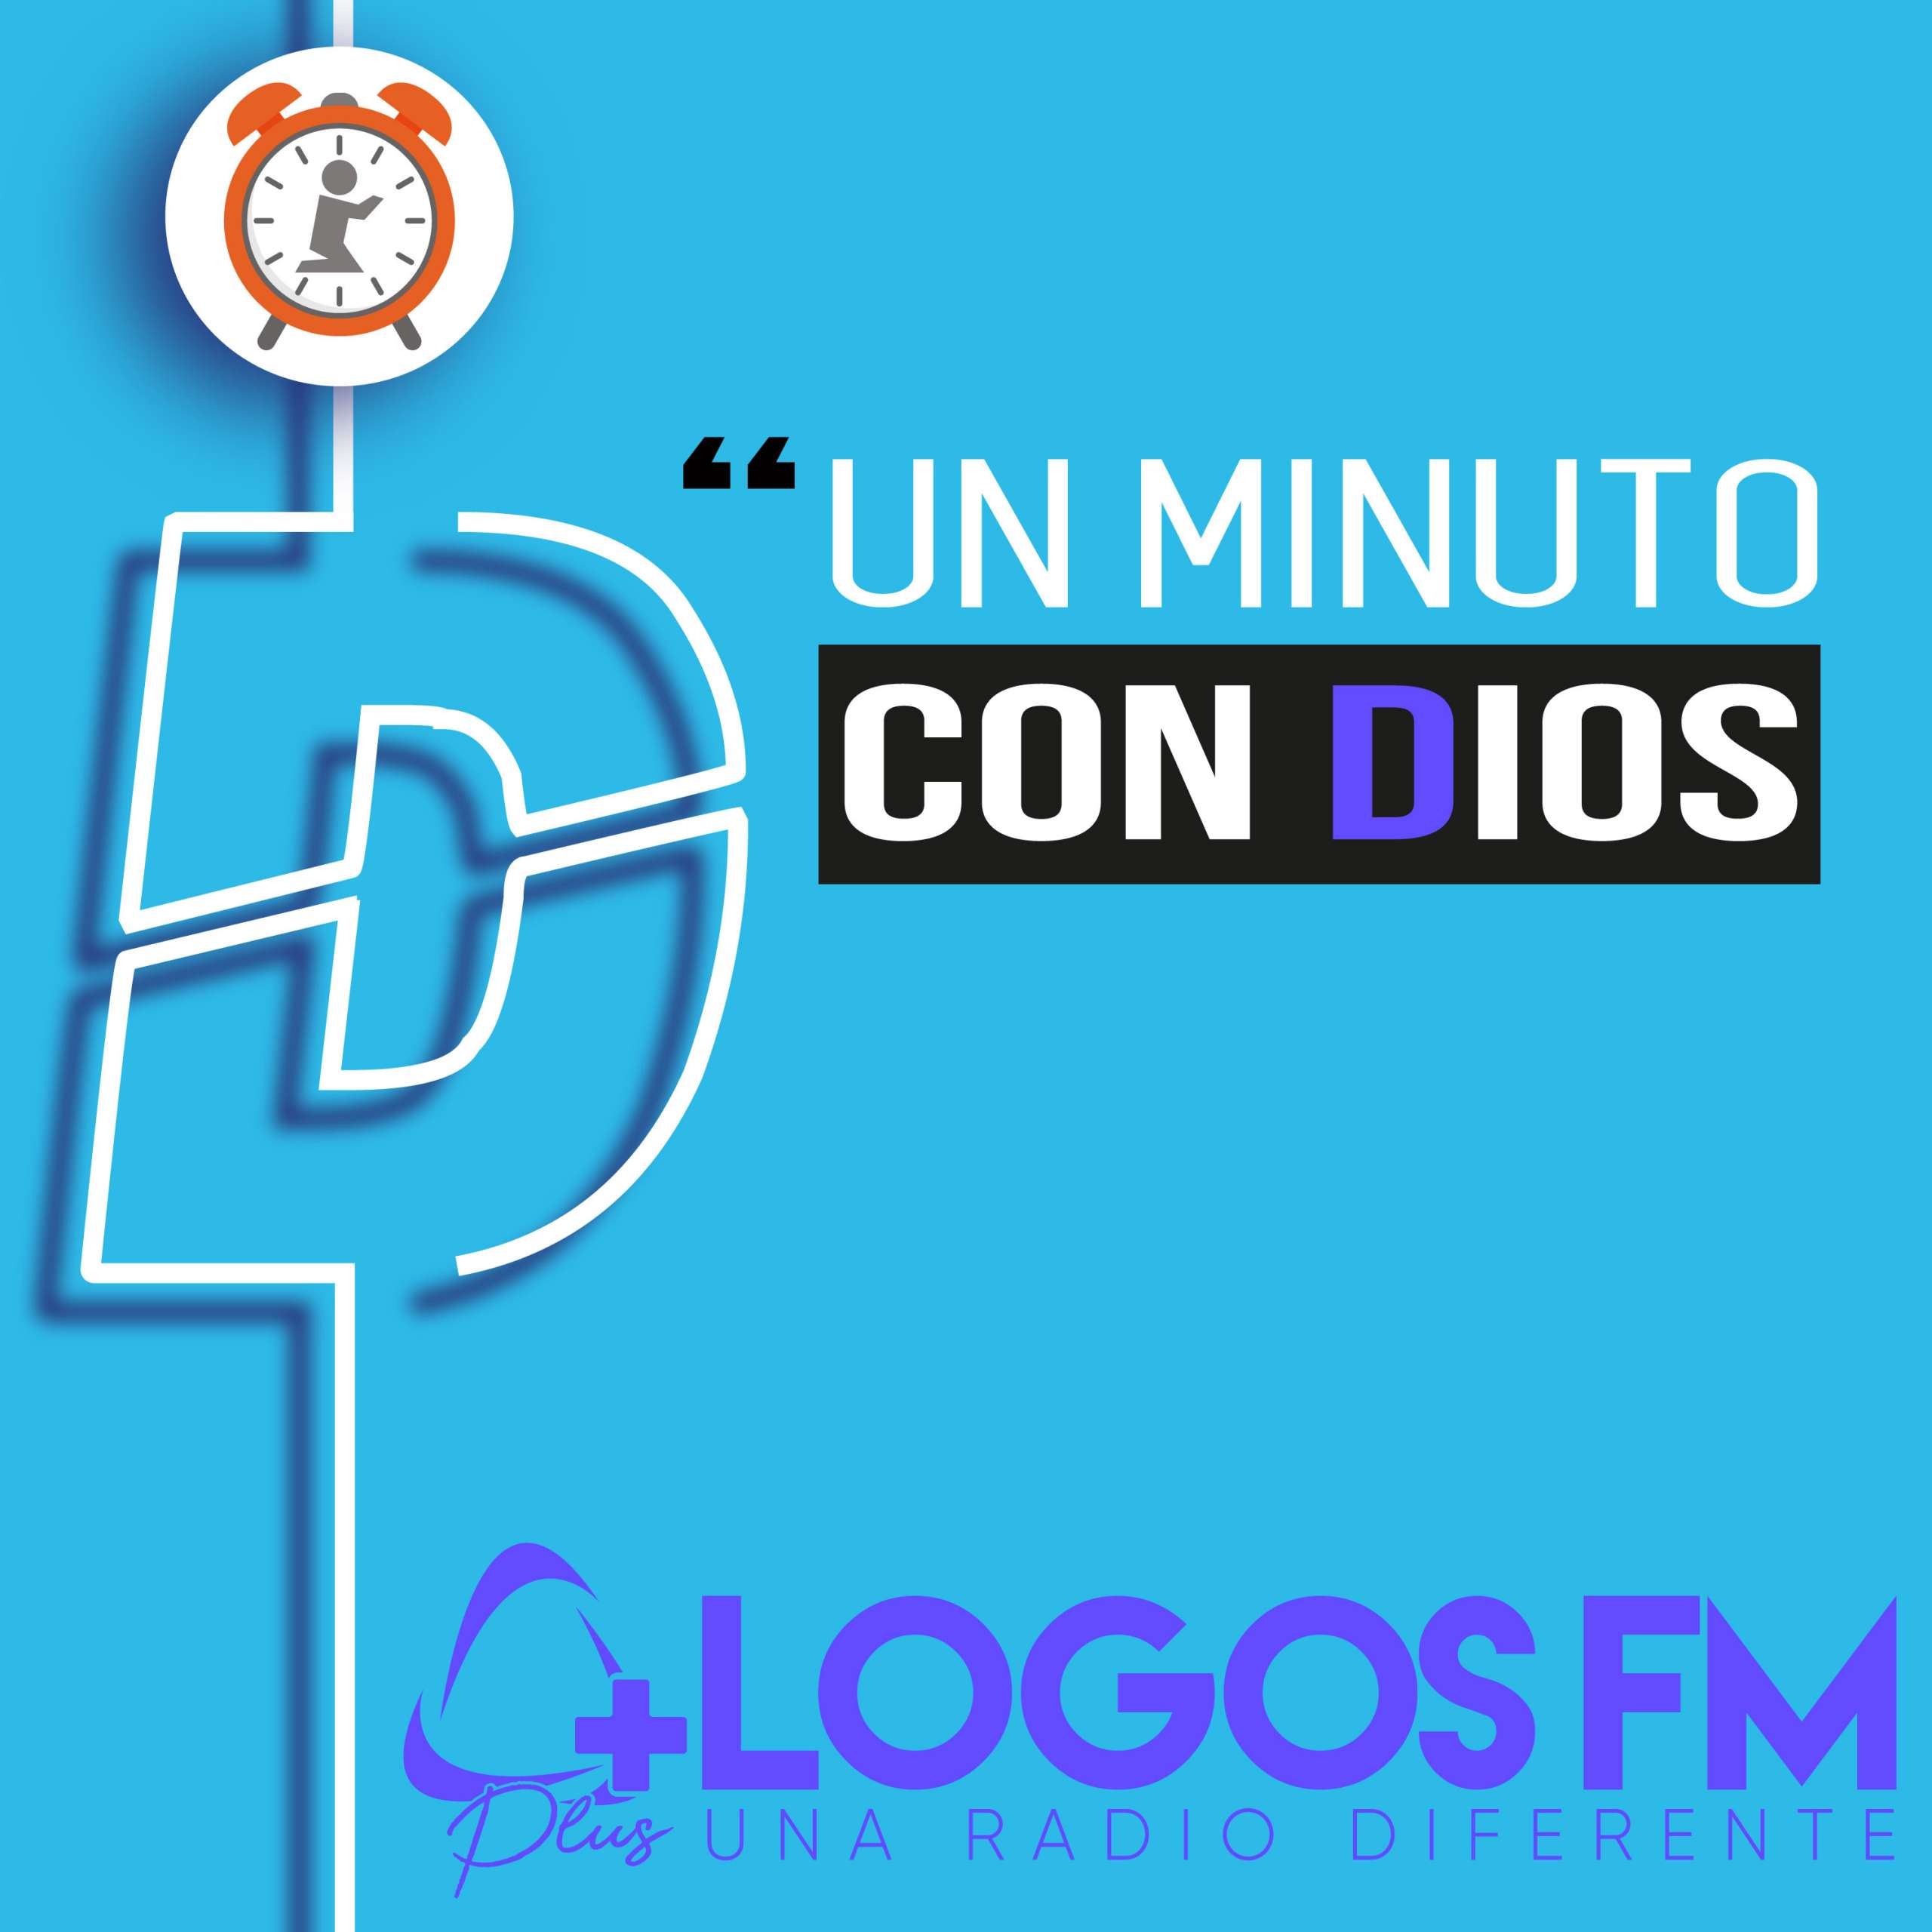 Un minuto con Dios - Episodio 370 - Loida Vargas